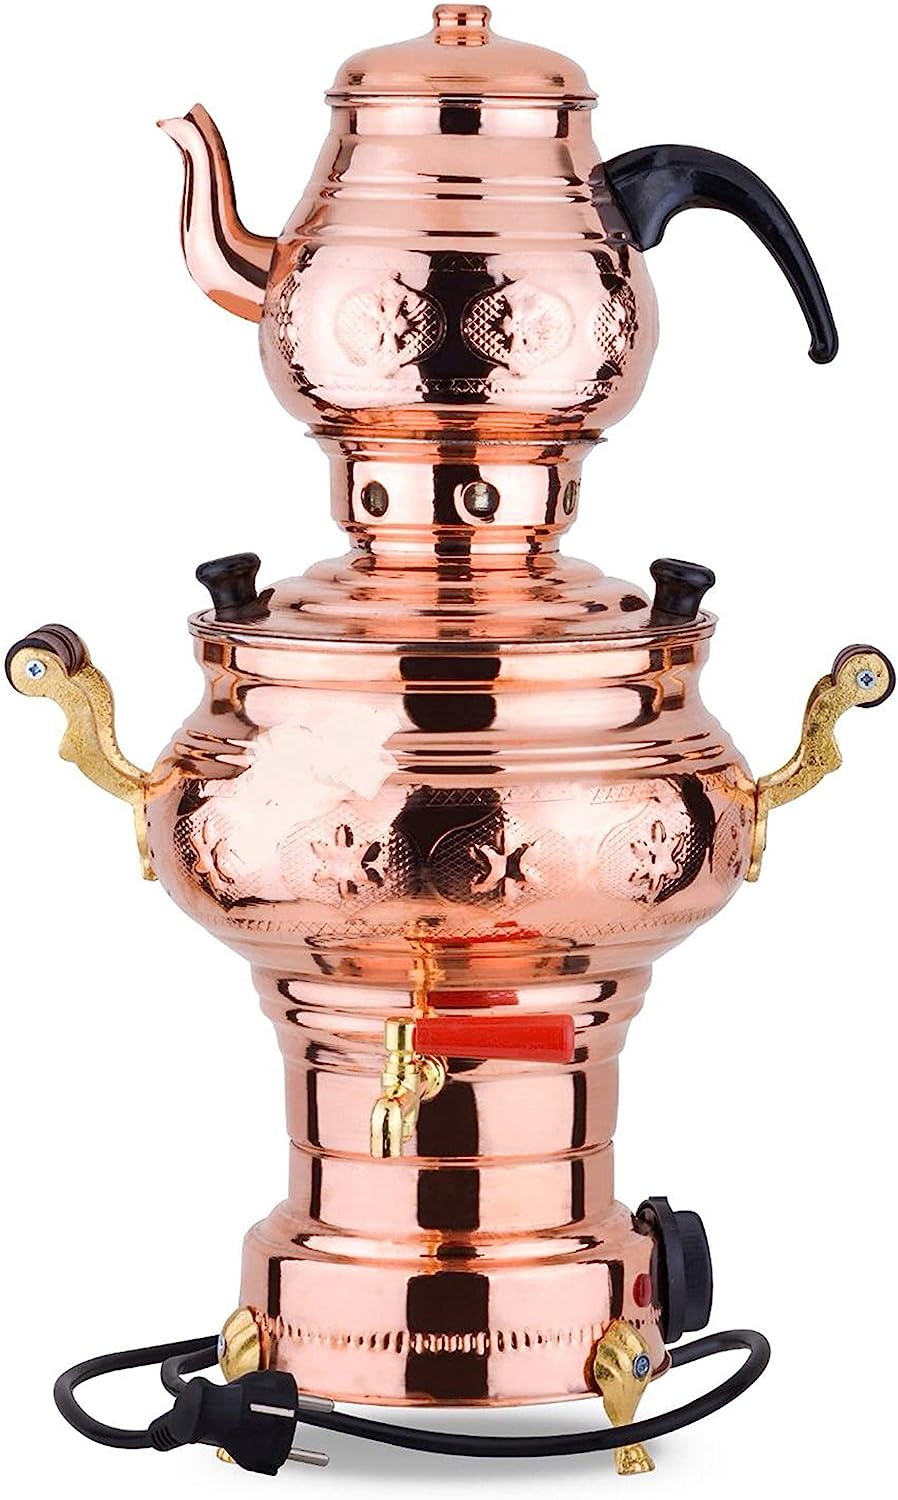 220 V Copper Samovar Teapot Set Electrically Operated Handmade Real Copper Samovar